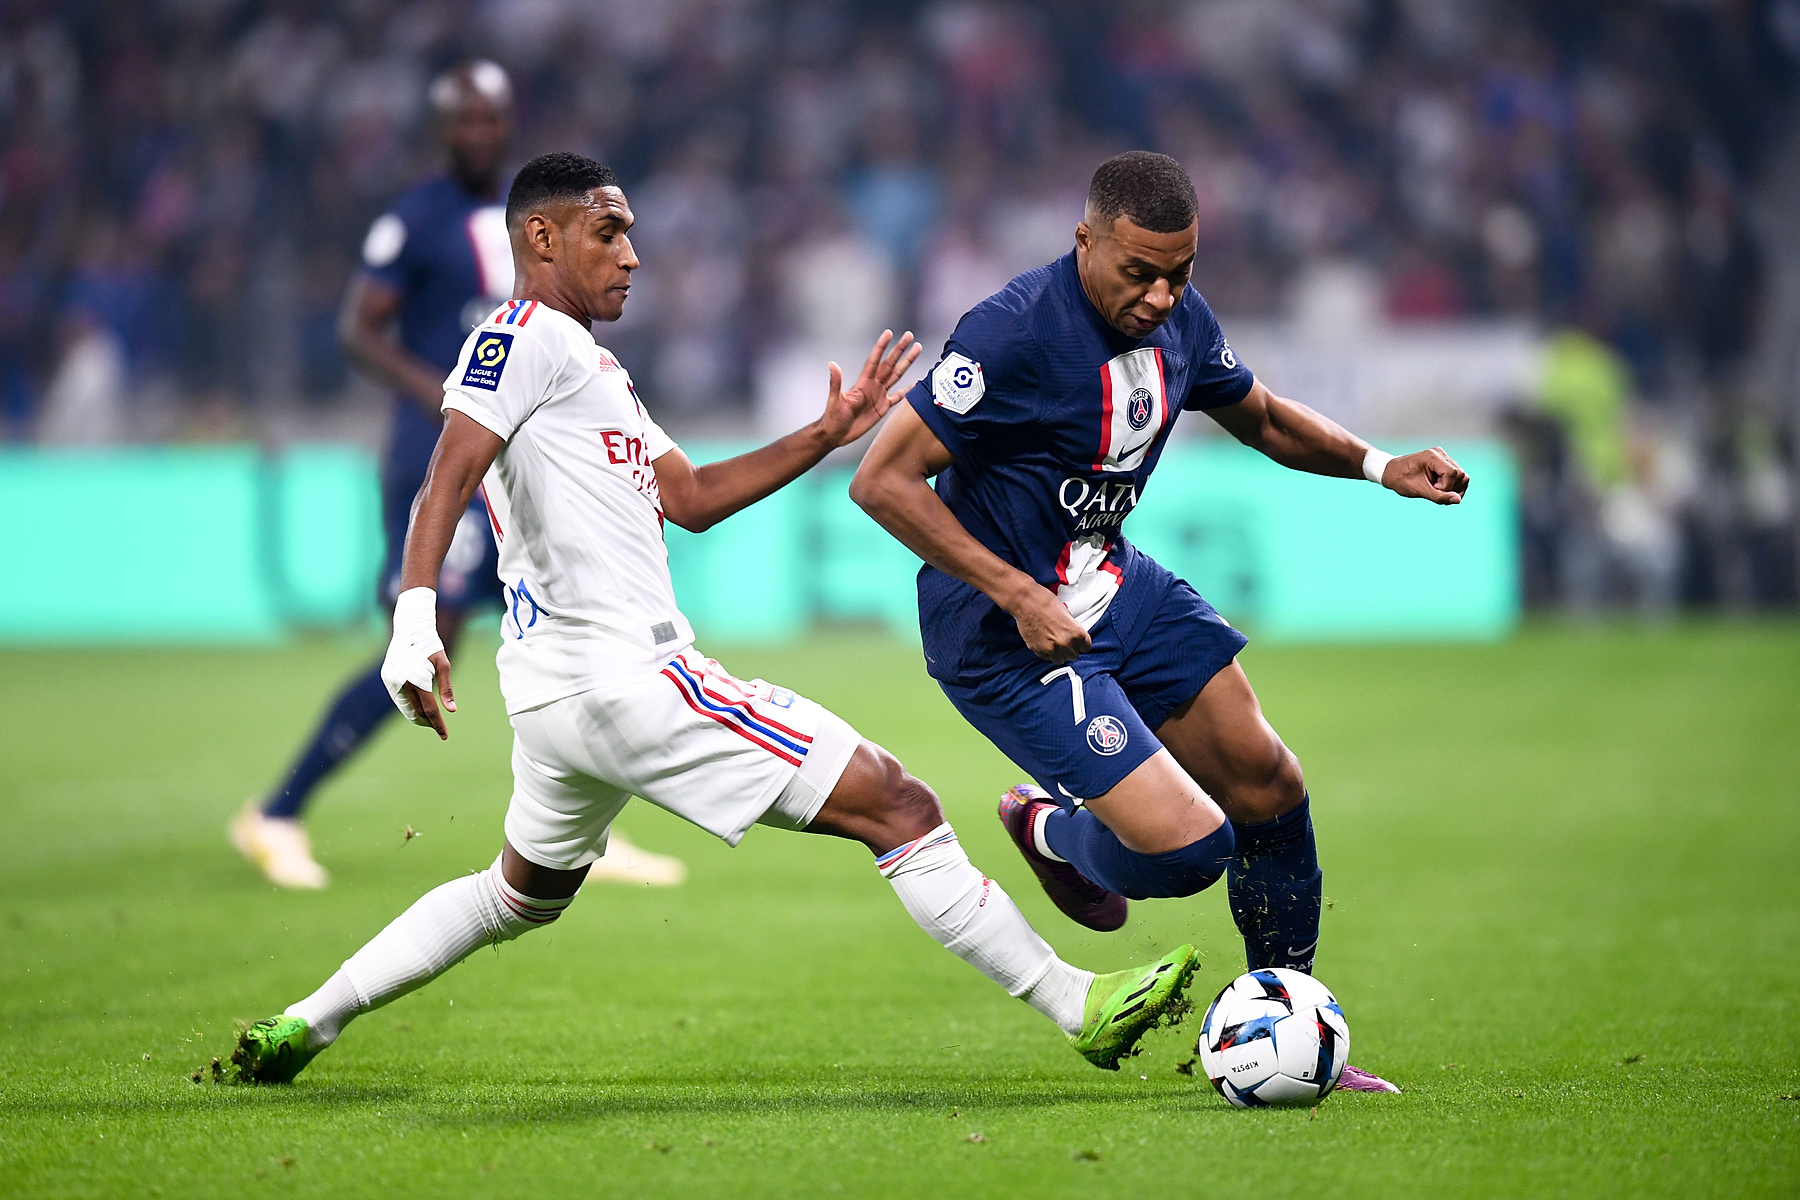 Paris Saint Germain – Olympique Lyon typy i kursy bukmacherskie